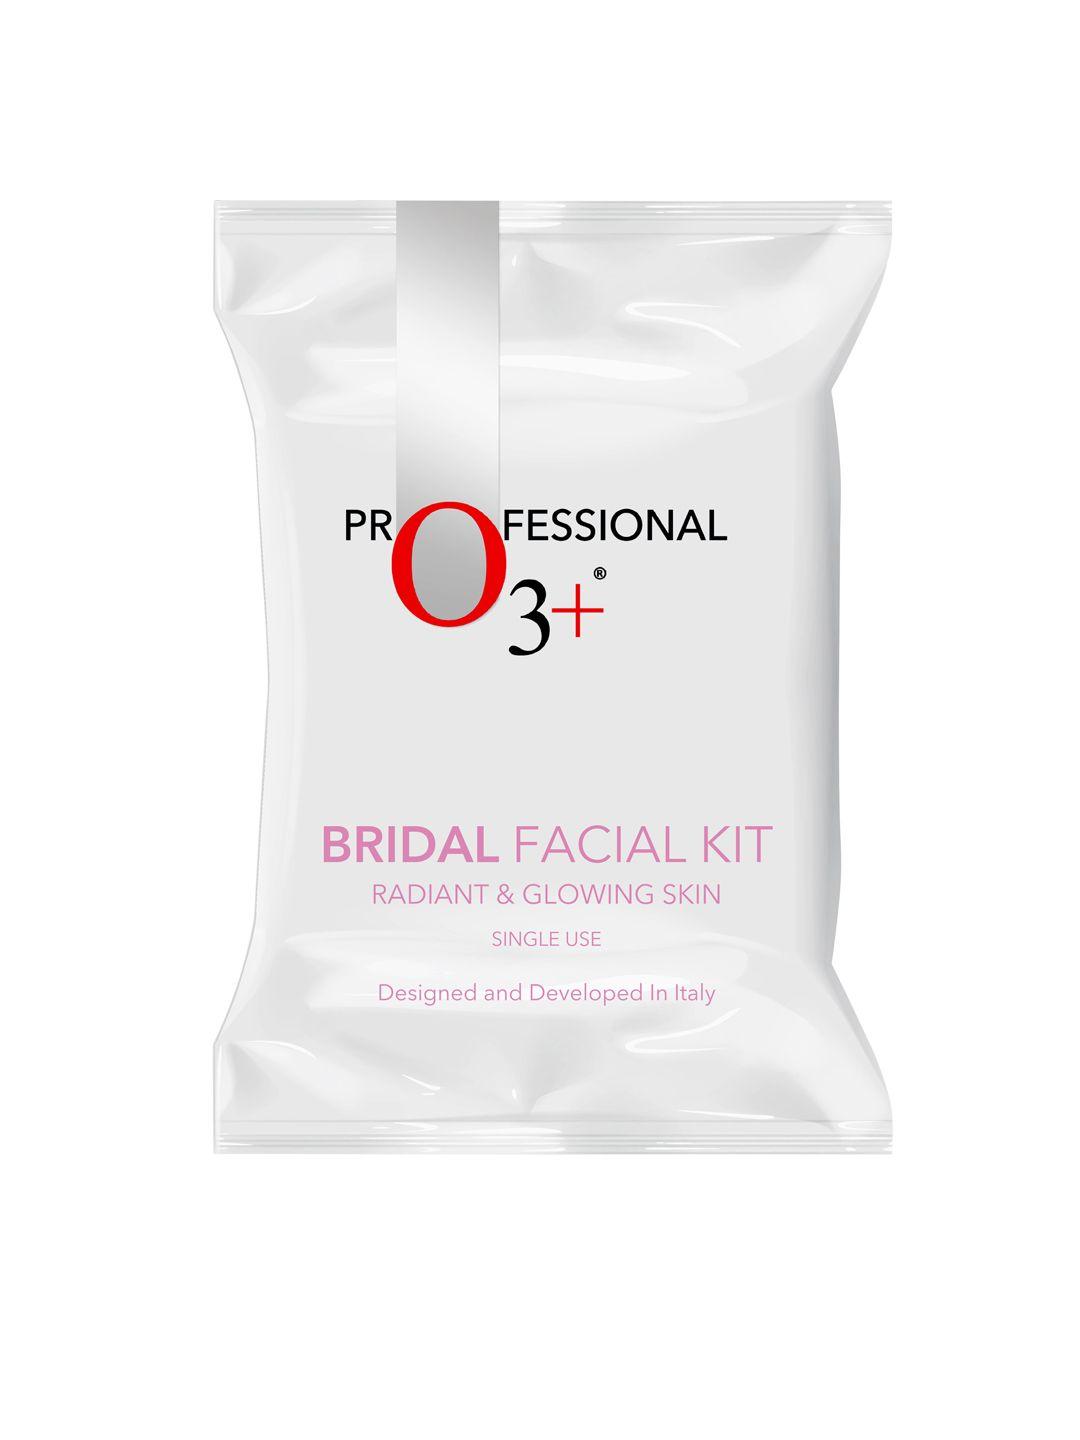 O3 Professional Radiant & Glowing Skin Bridal Facial Kit